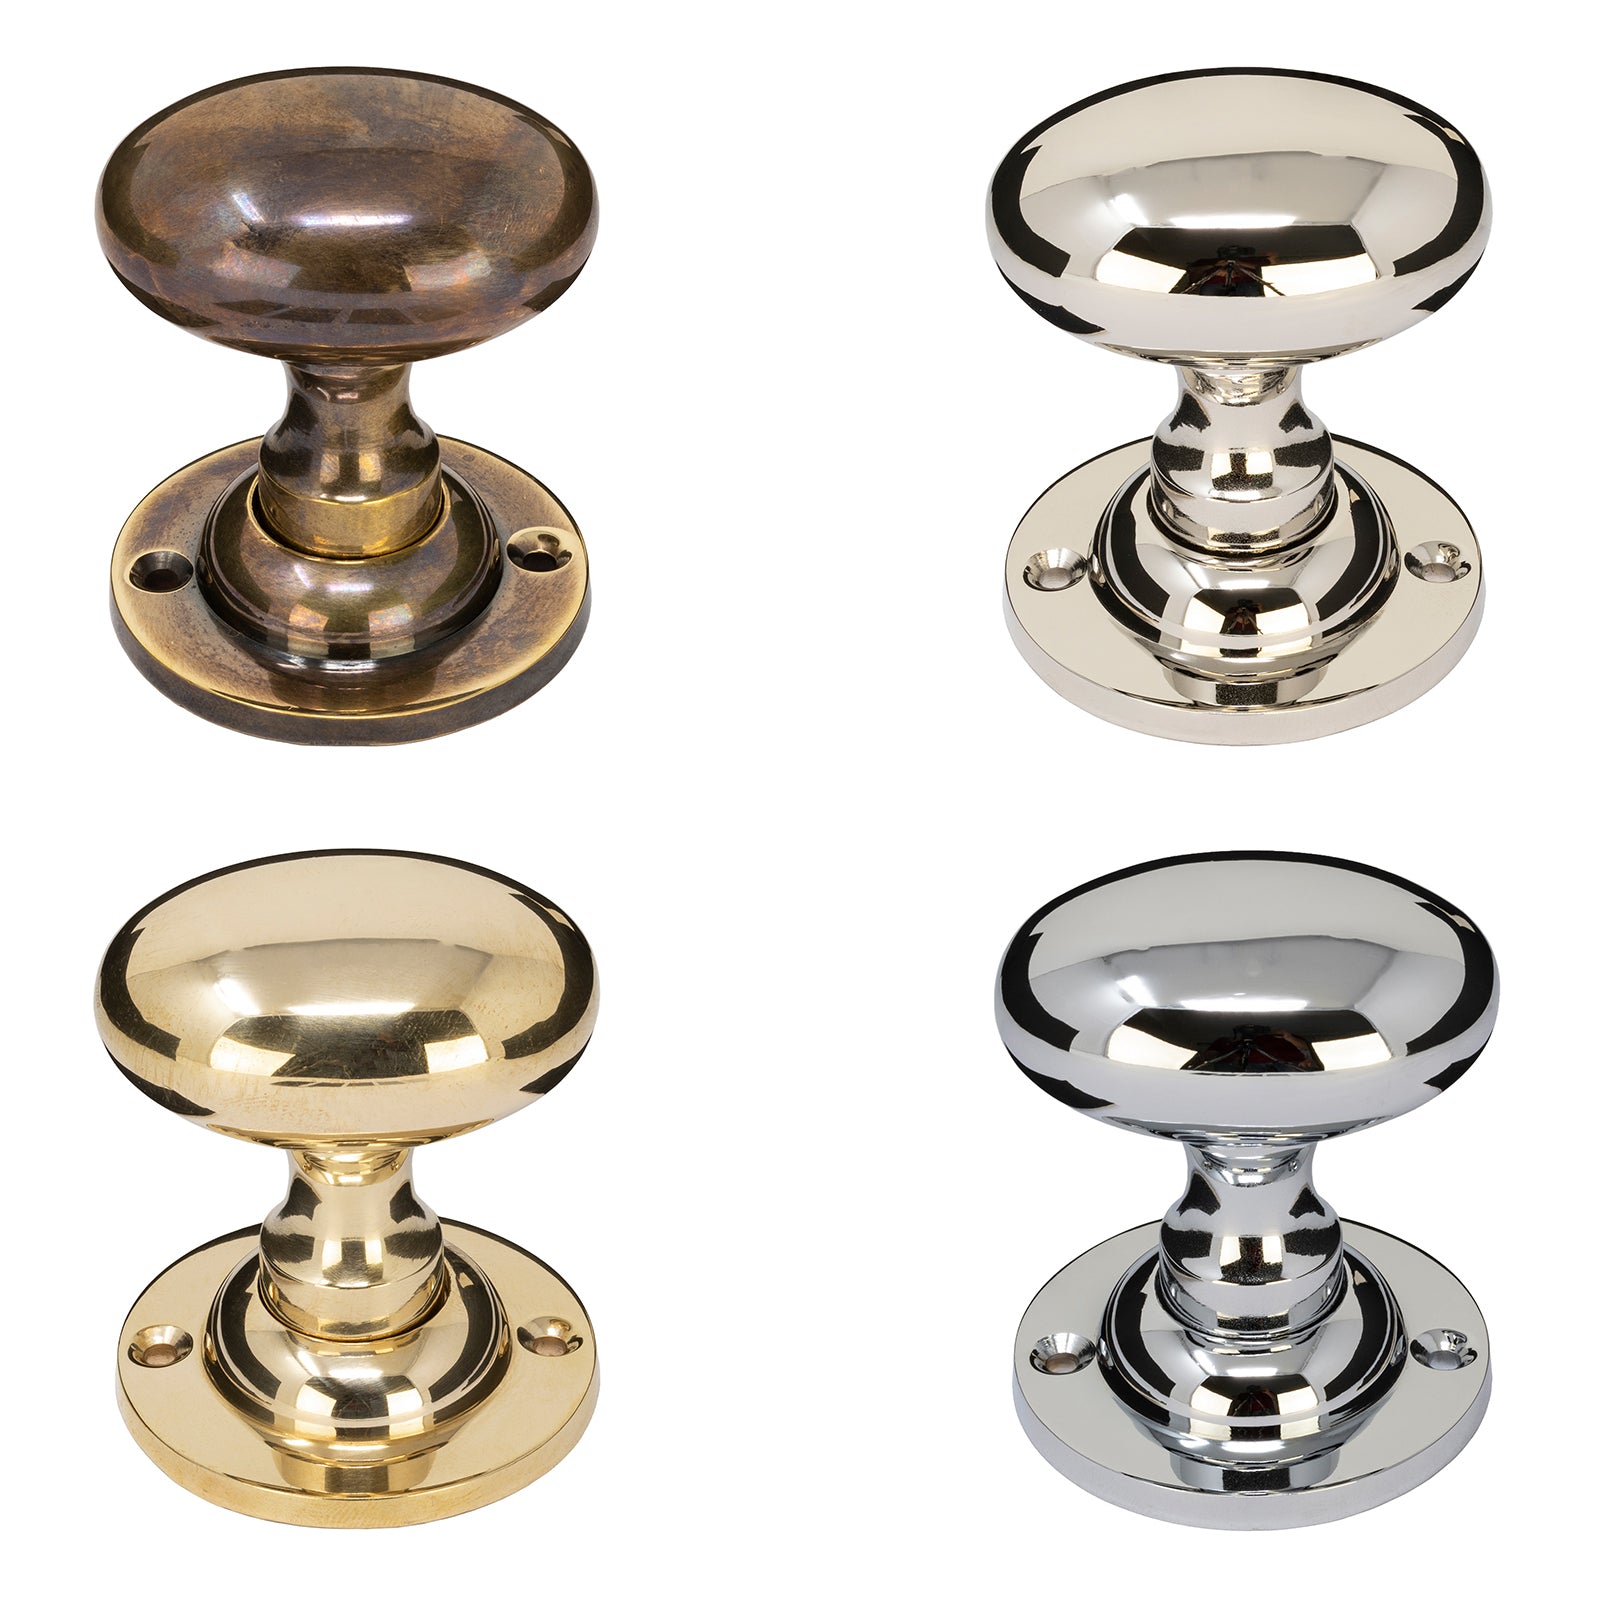 Oval Brass Door Knobs in brass, bronze, chrome & nickel finishes